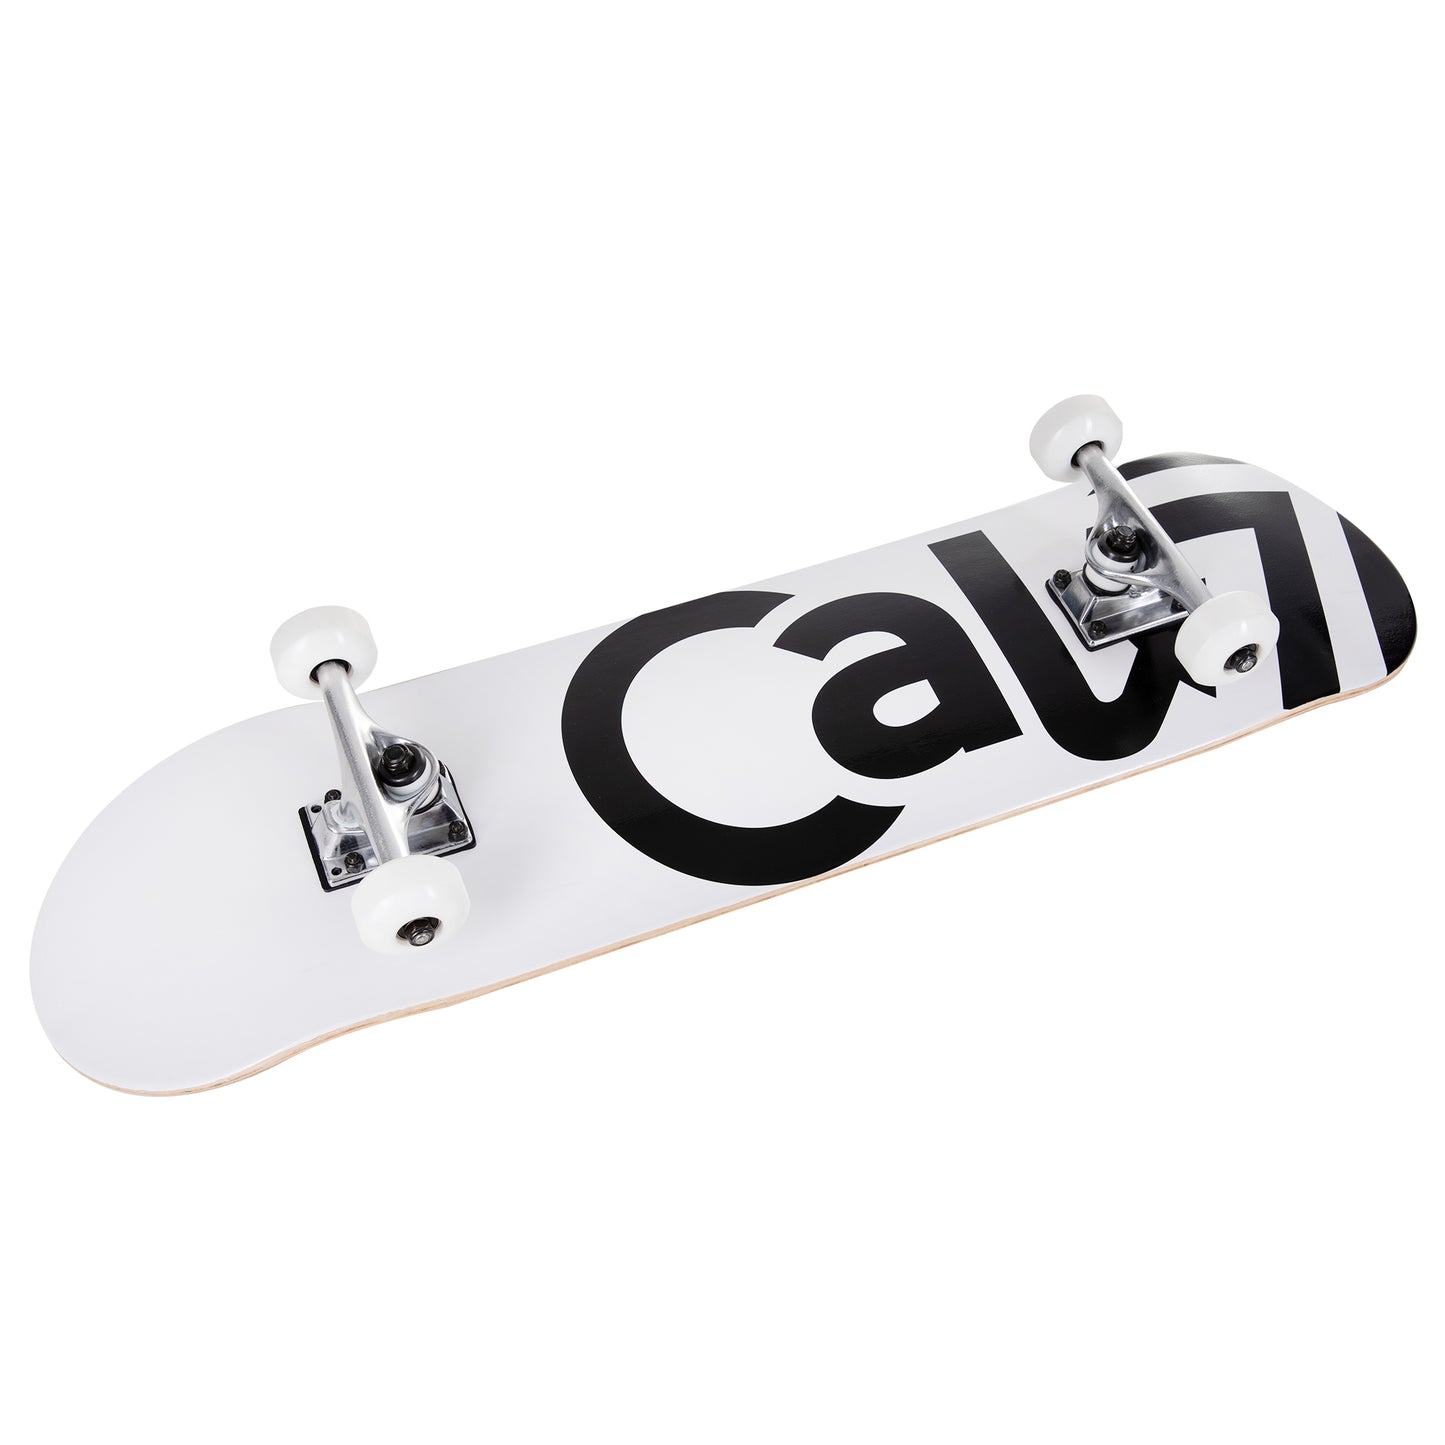 Cal 7 White Tundra Complete 8.0 Inch skateboard